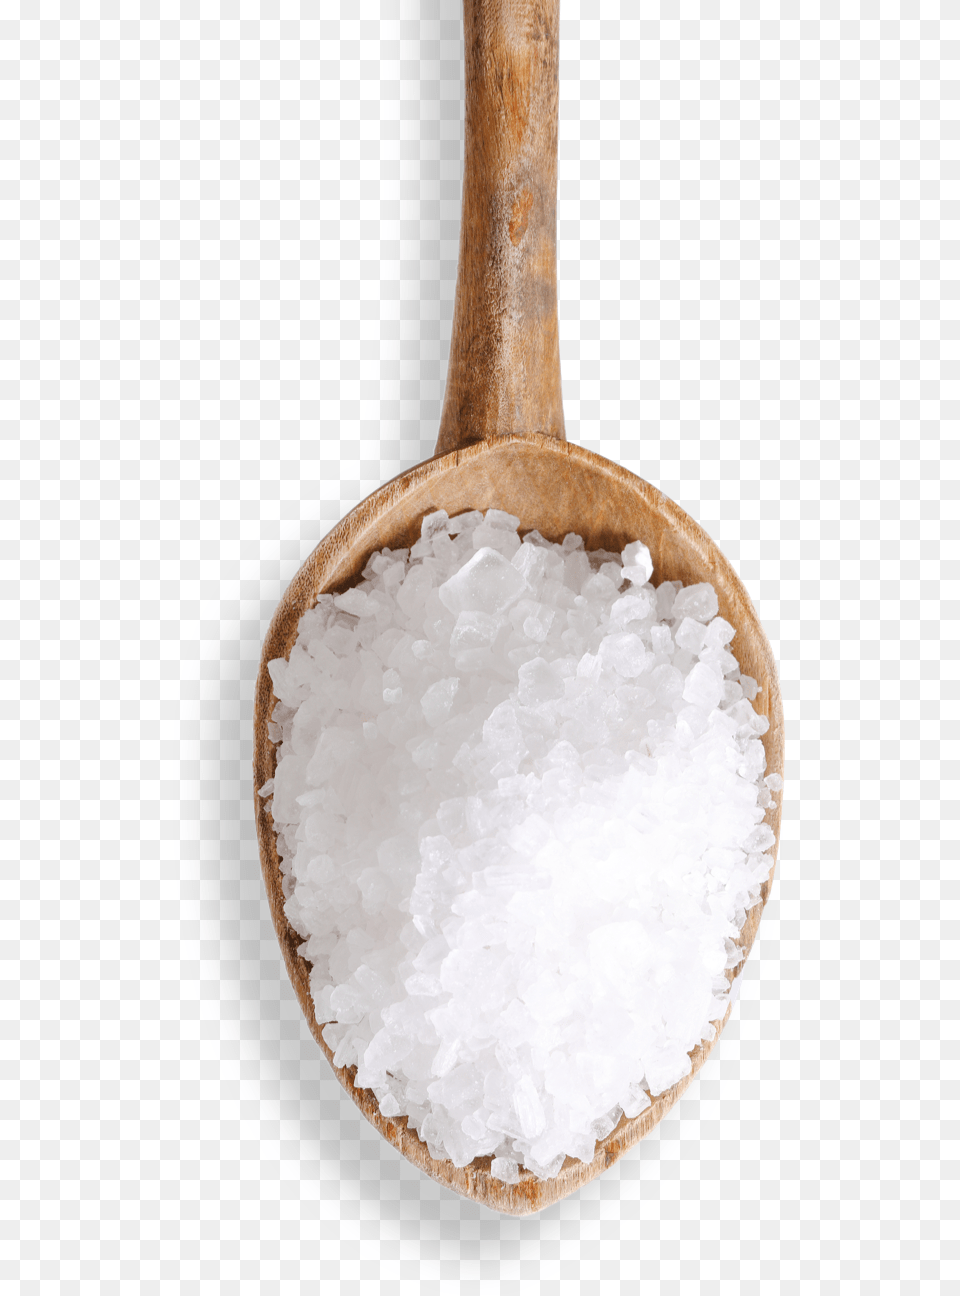 Salt, Cutlery, Spoon Free Transparent Png